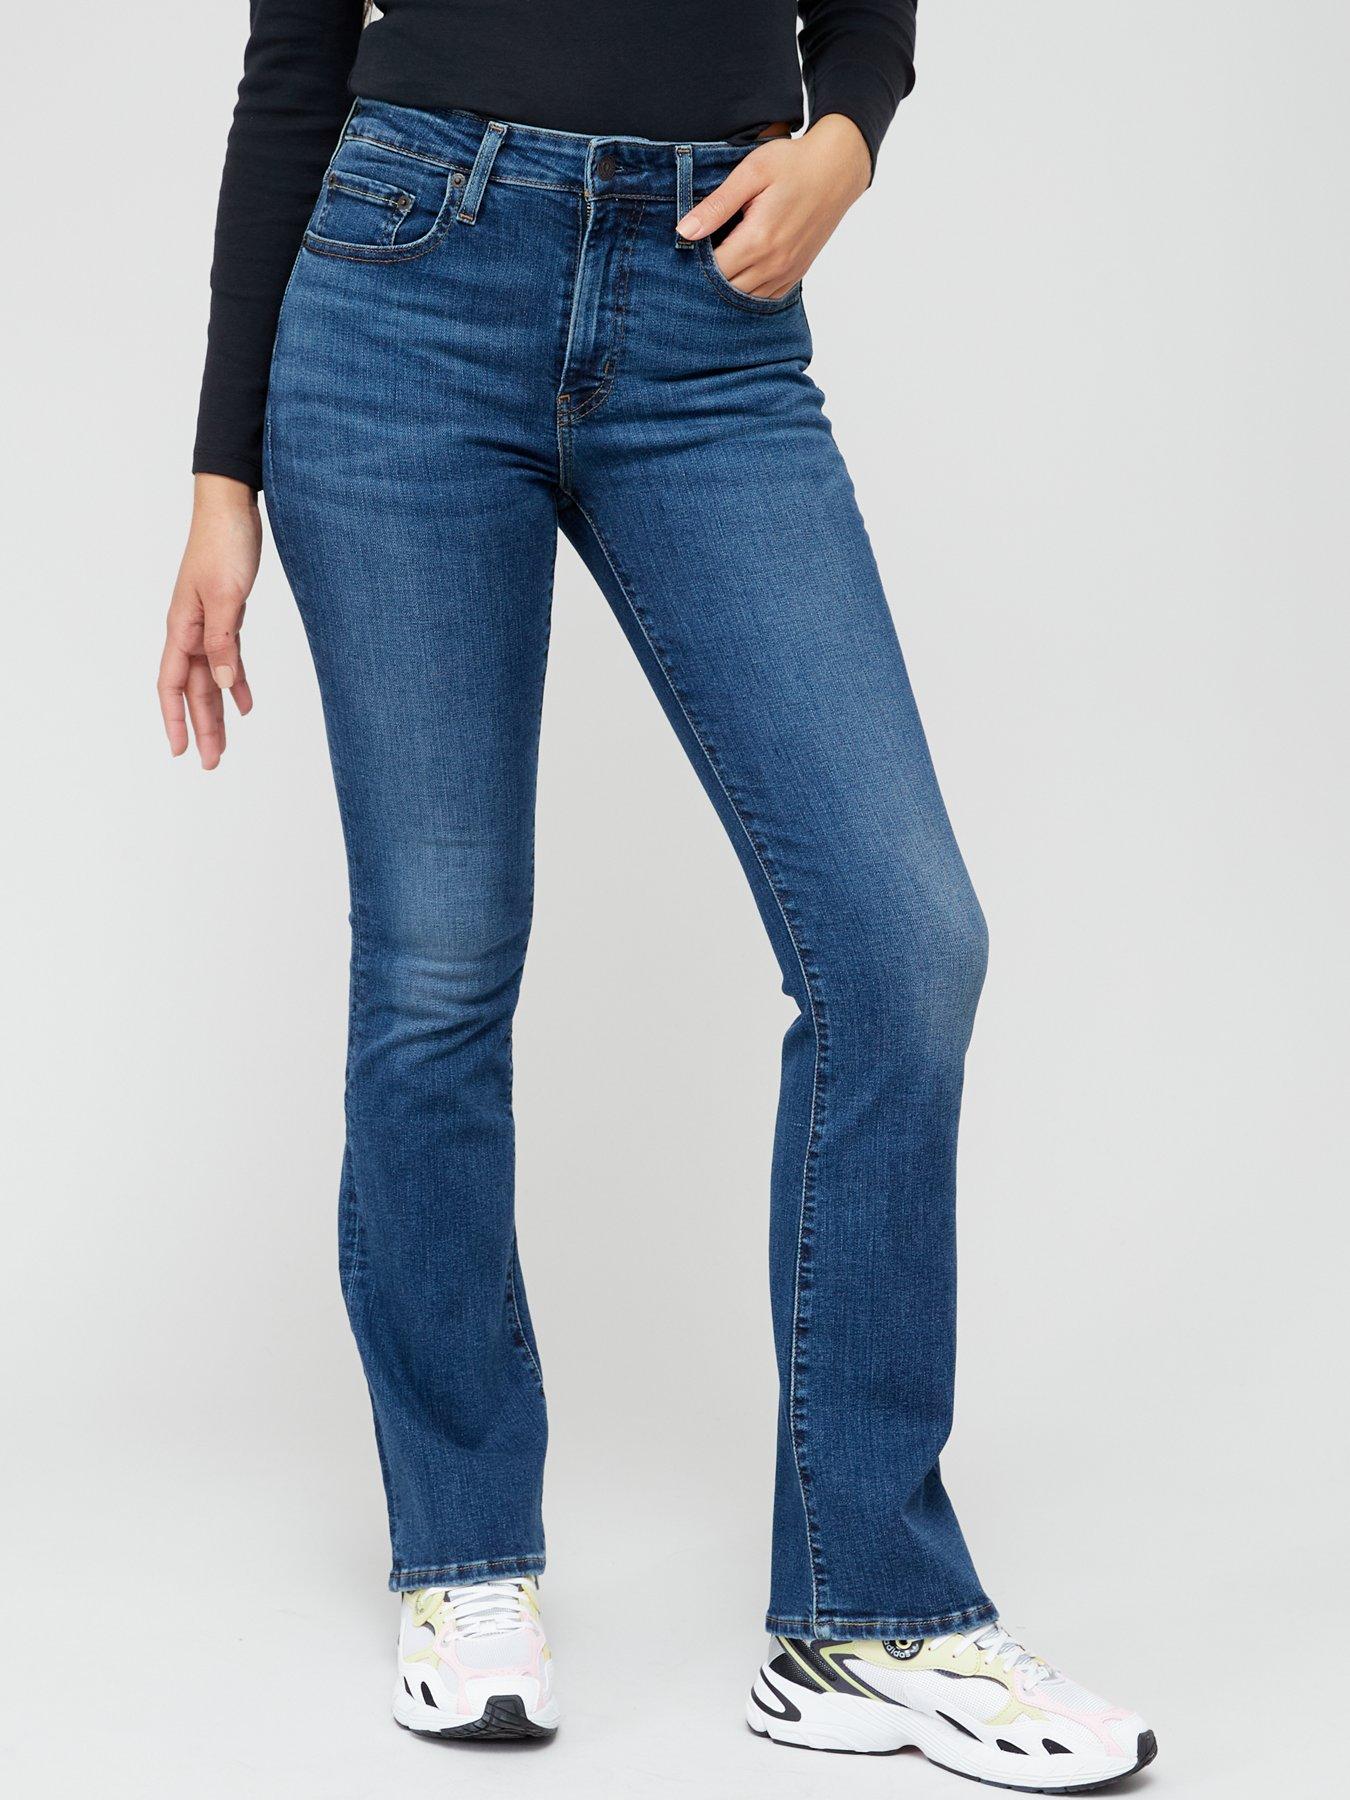 Bootcut Jeans, Levi's, Jeans, Women